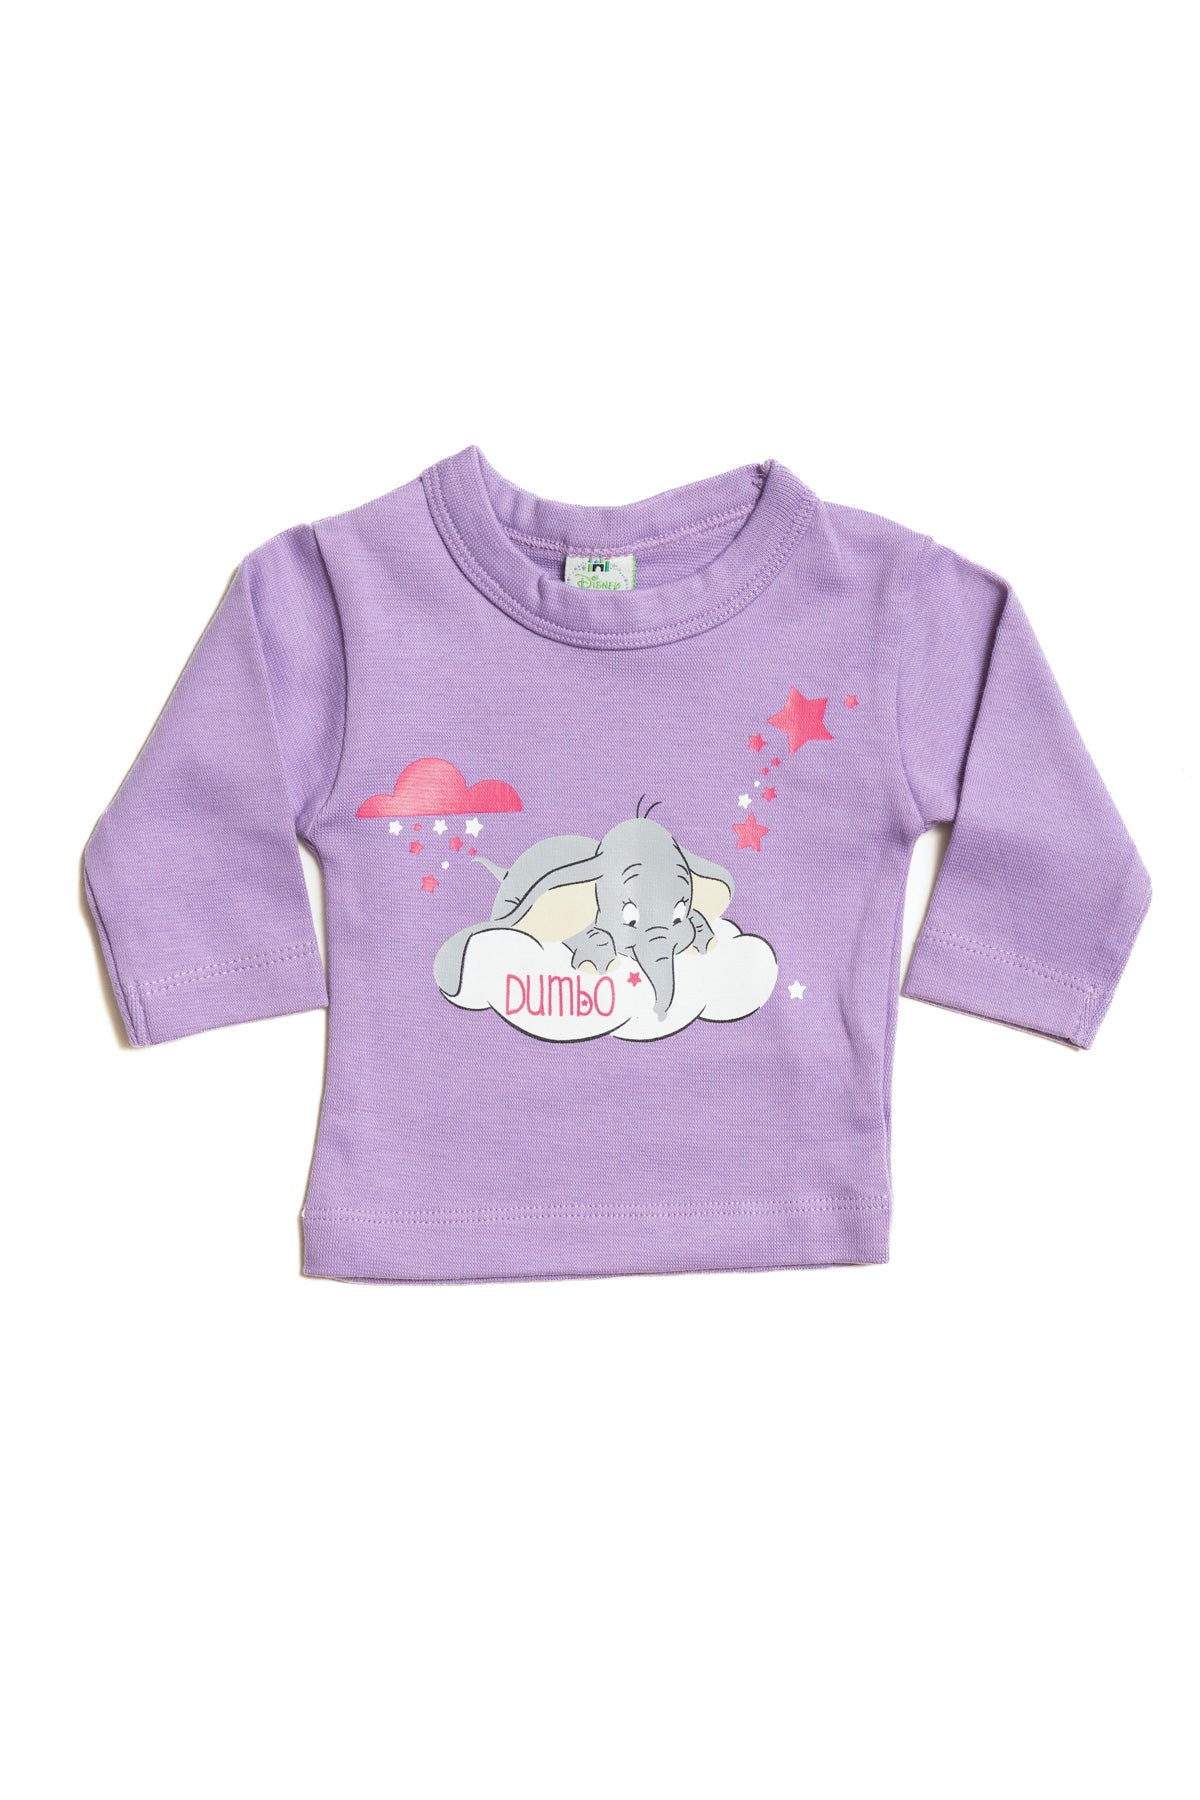 T-Shirt Baby Dumbo sleeve 4098-4082